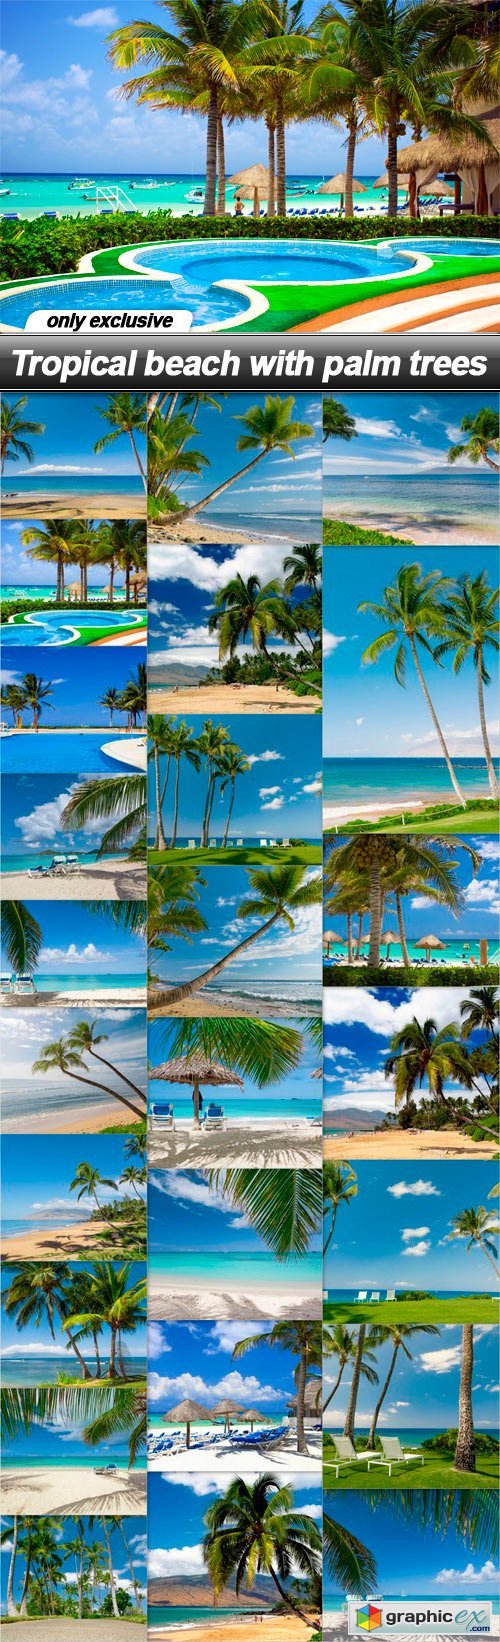 Tropical beach with palm trees - 25 UHQ JPEG